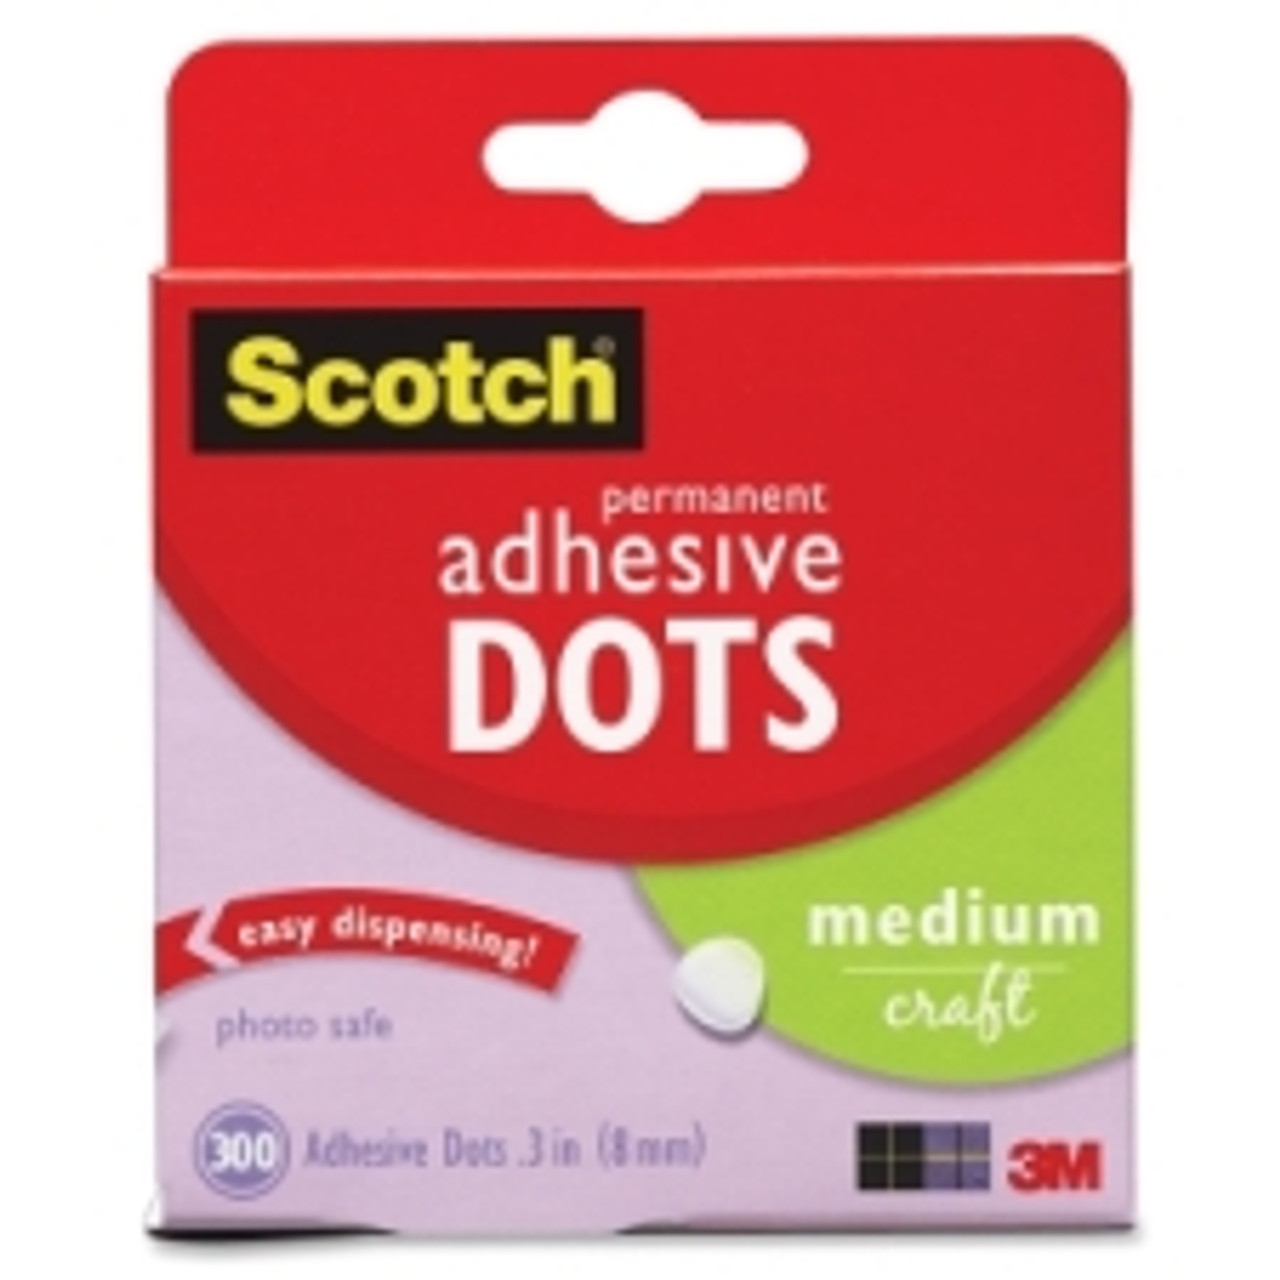 Tombow - Adhesive Dots Dispenser